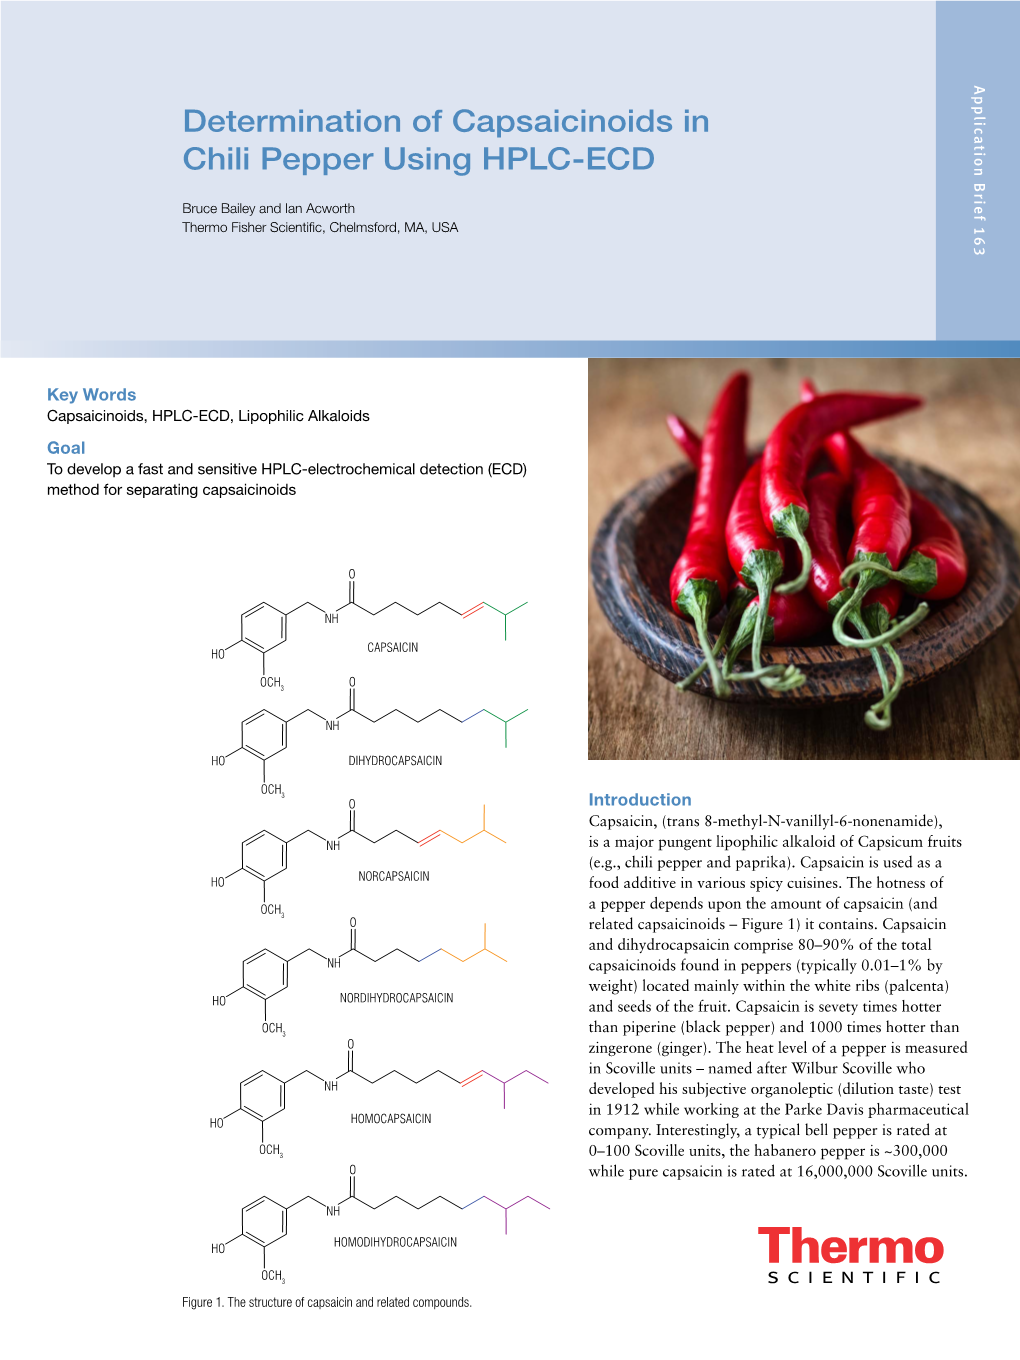 Determination of Capsaicinoids in Chili Pepper Using HPLC-ECD